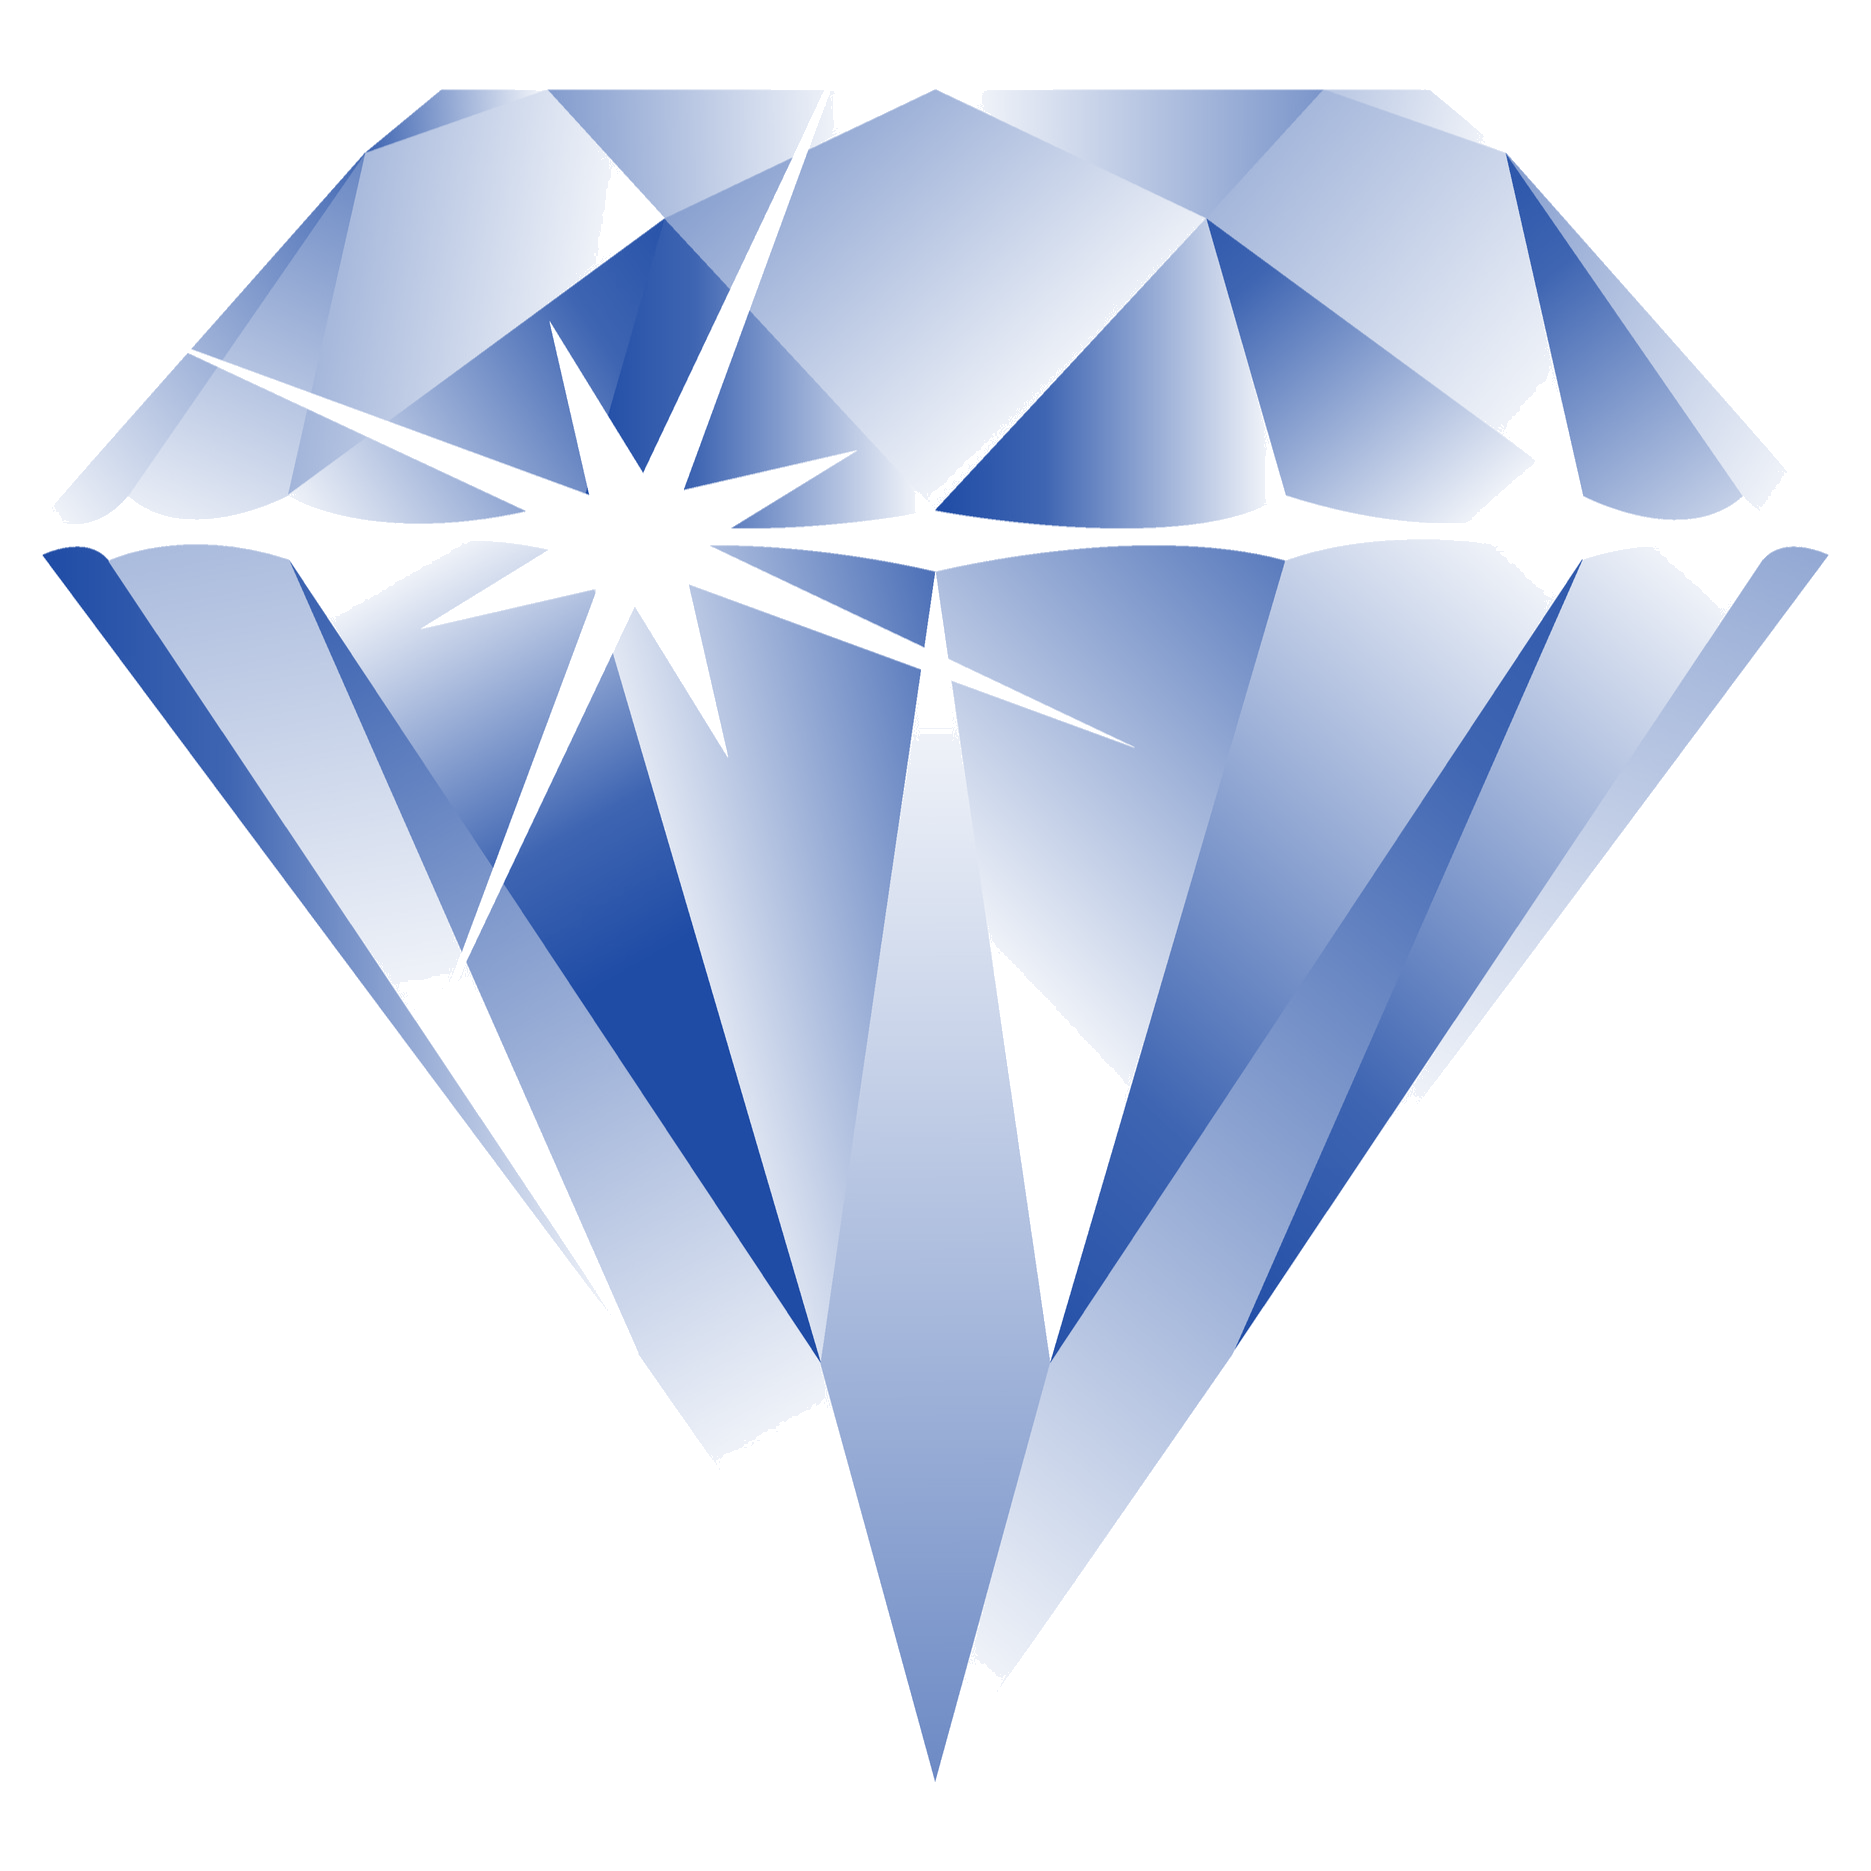 diamond shapes photoshop download